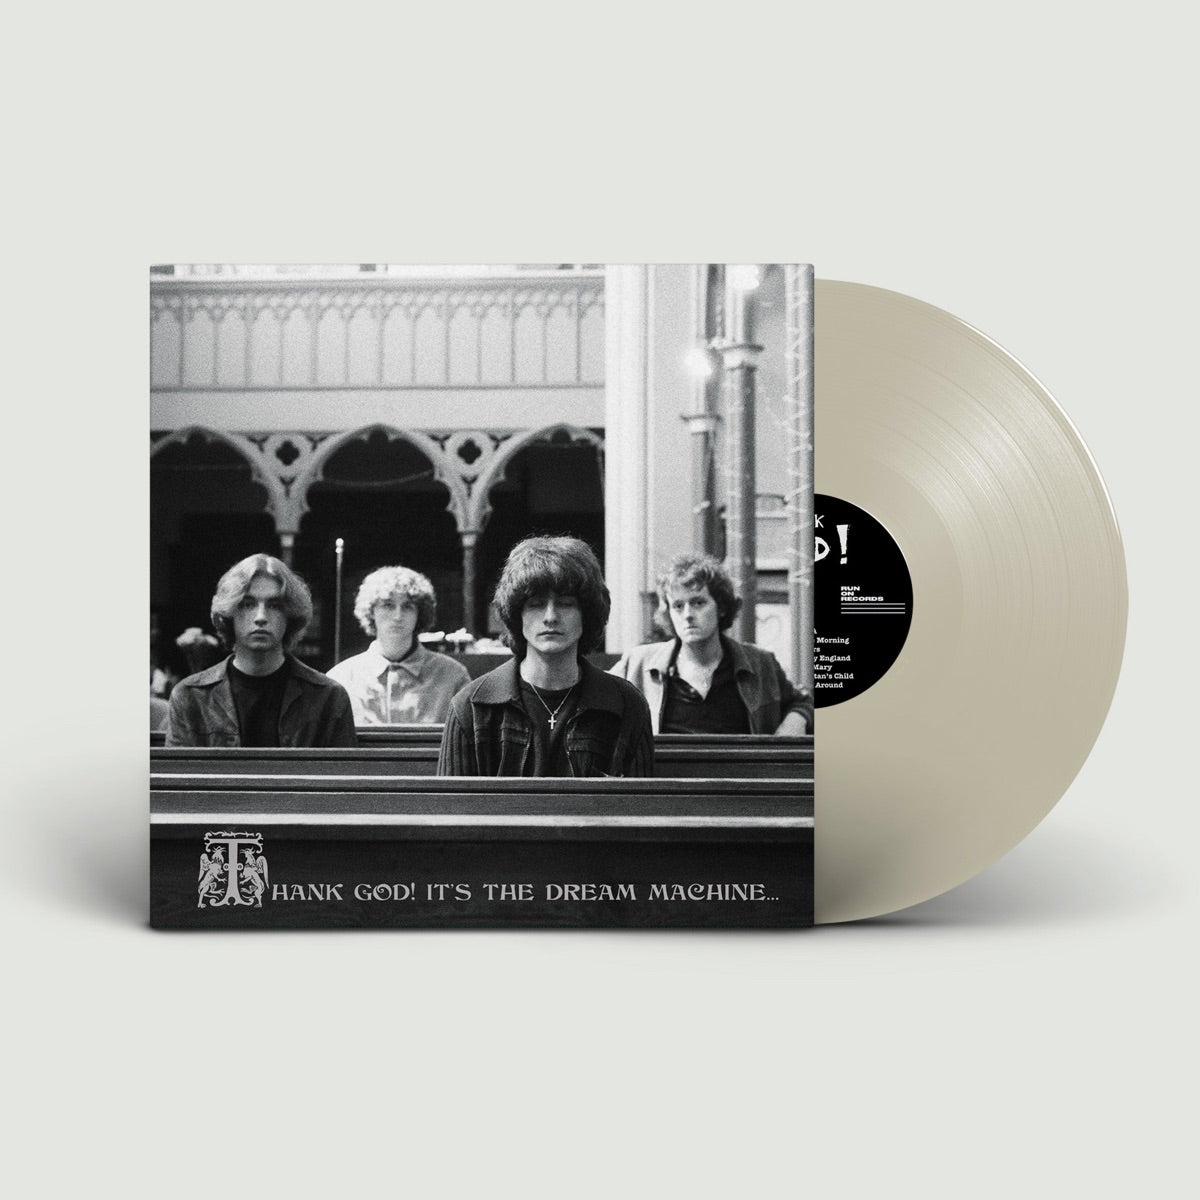 The Dream Machine - Thank God! It’s The Dream Machine…Limited Edition White Vinyl LP